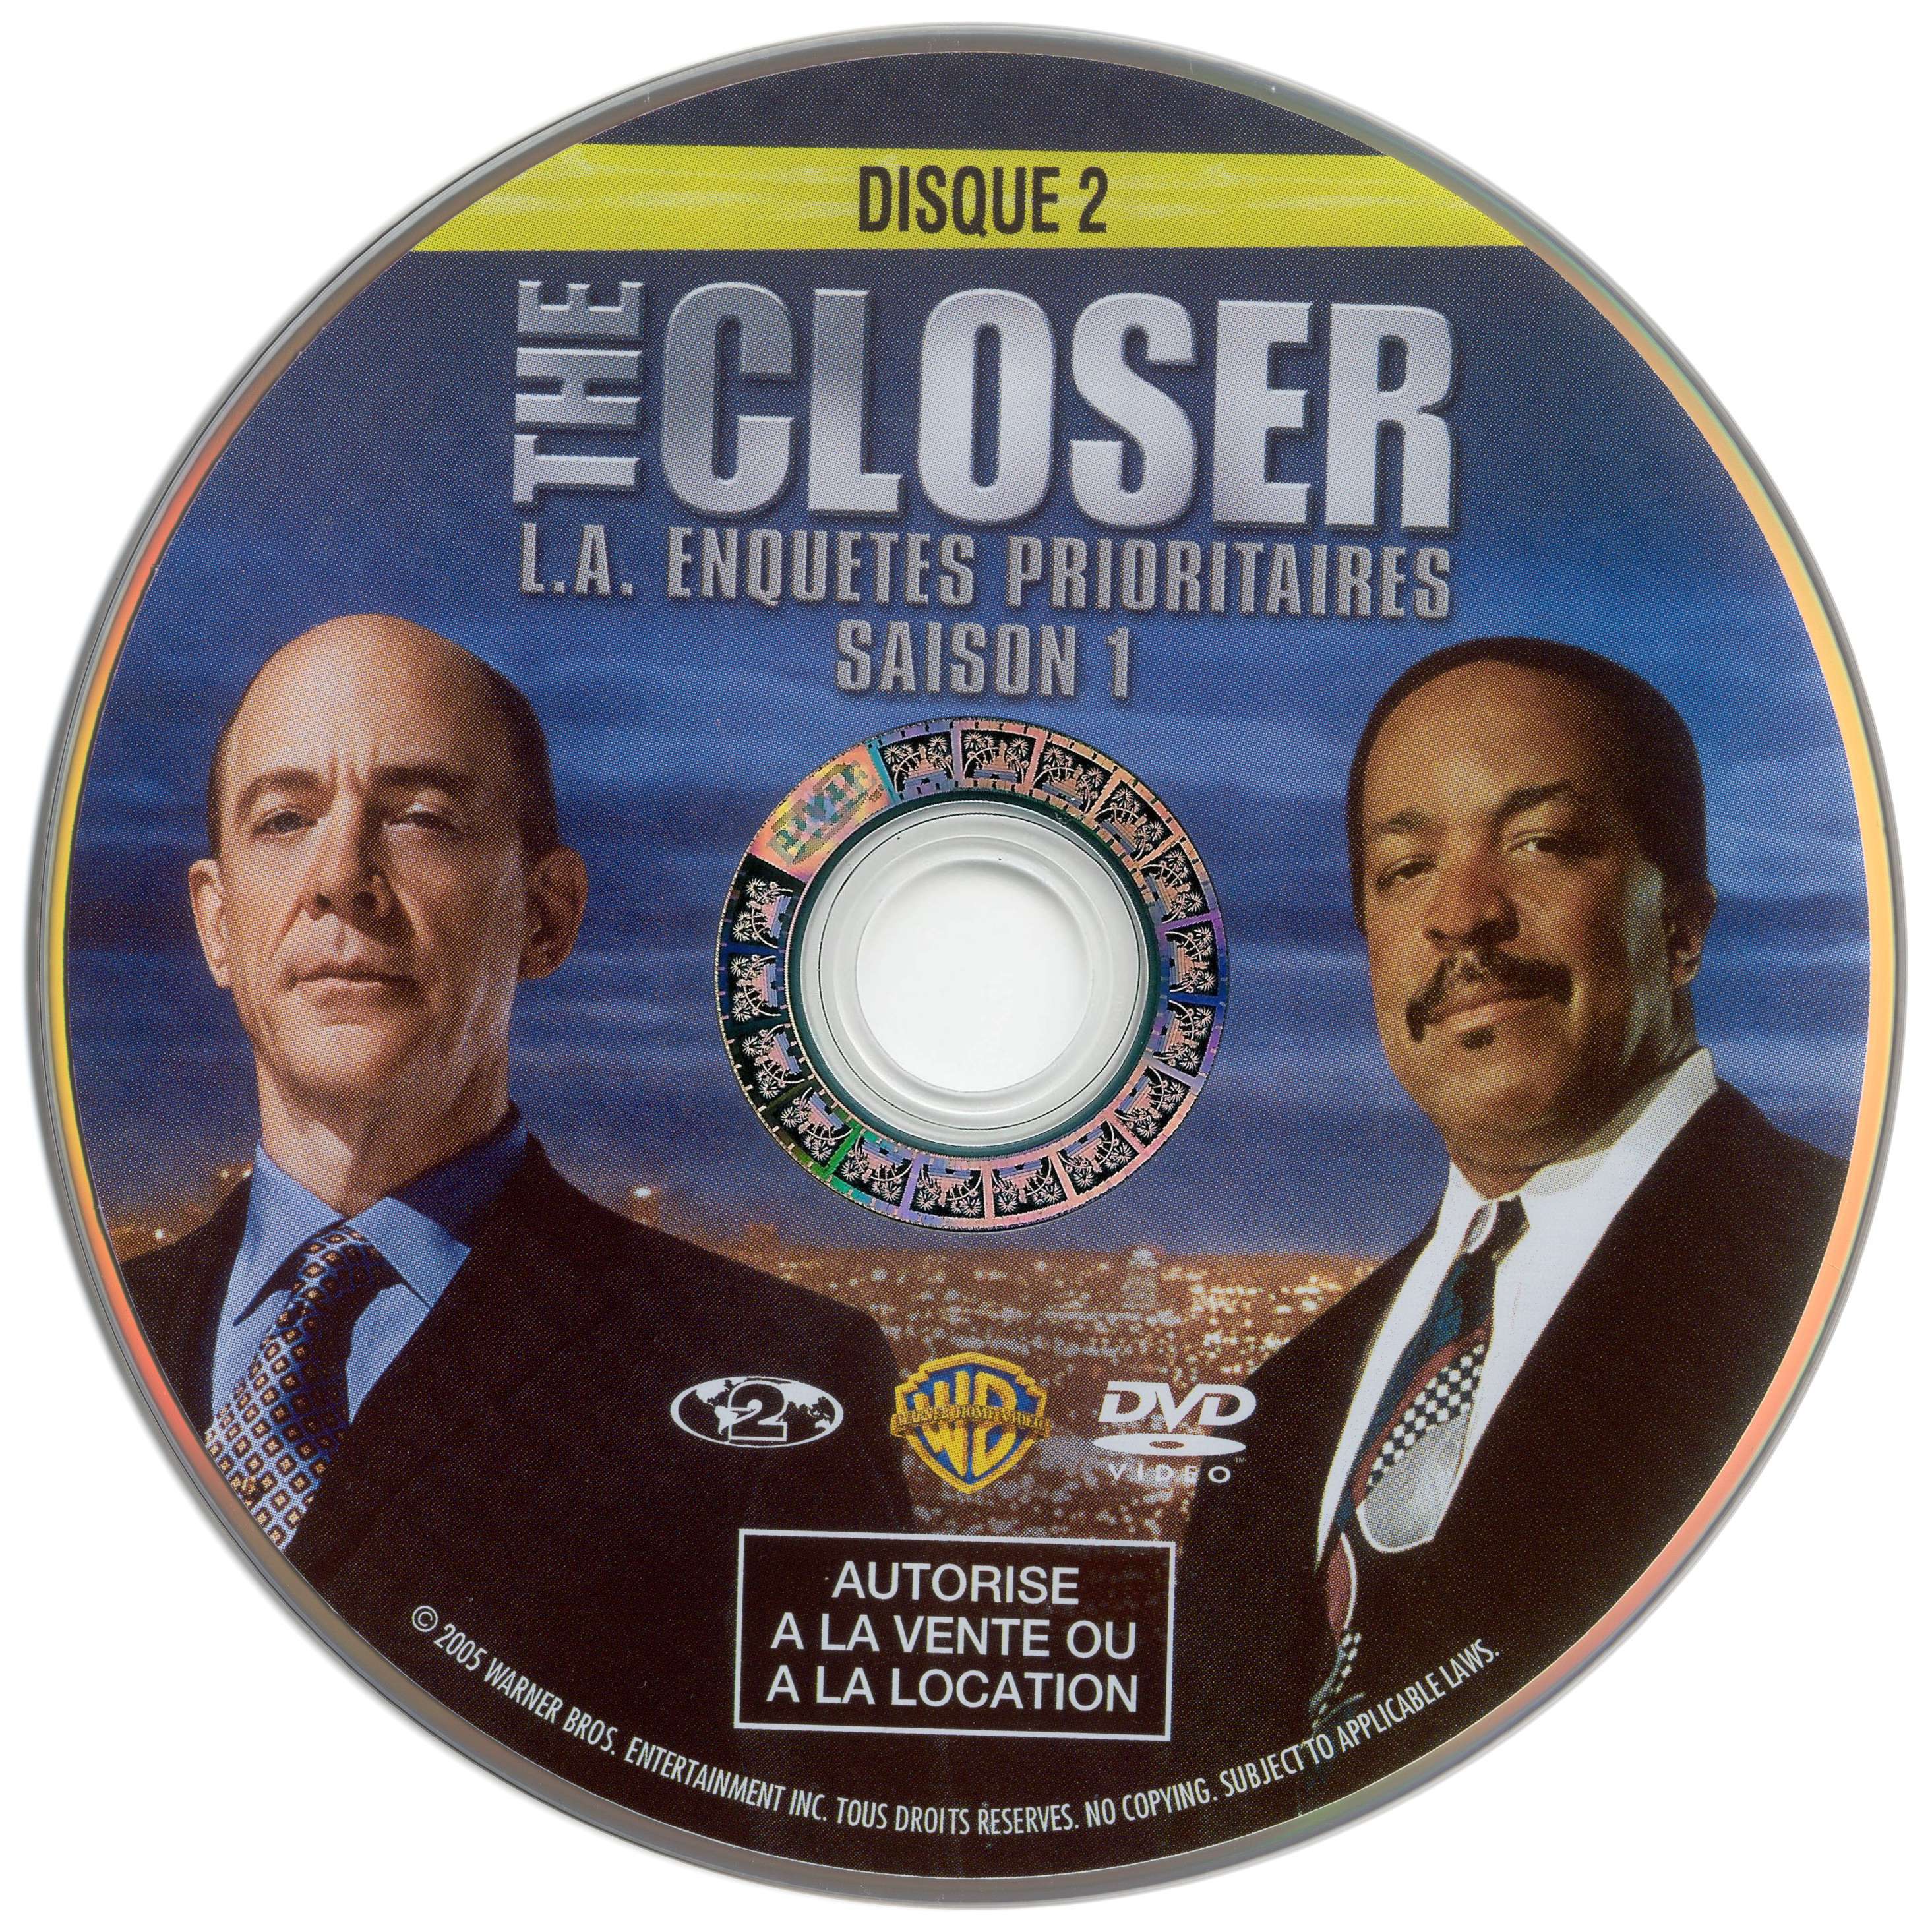 The closer Saison 1 DISC 2